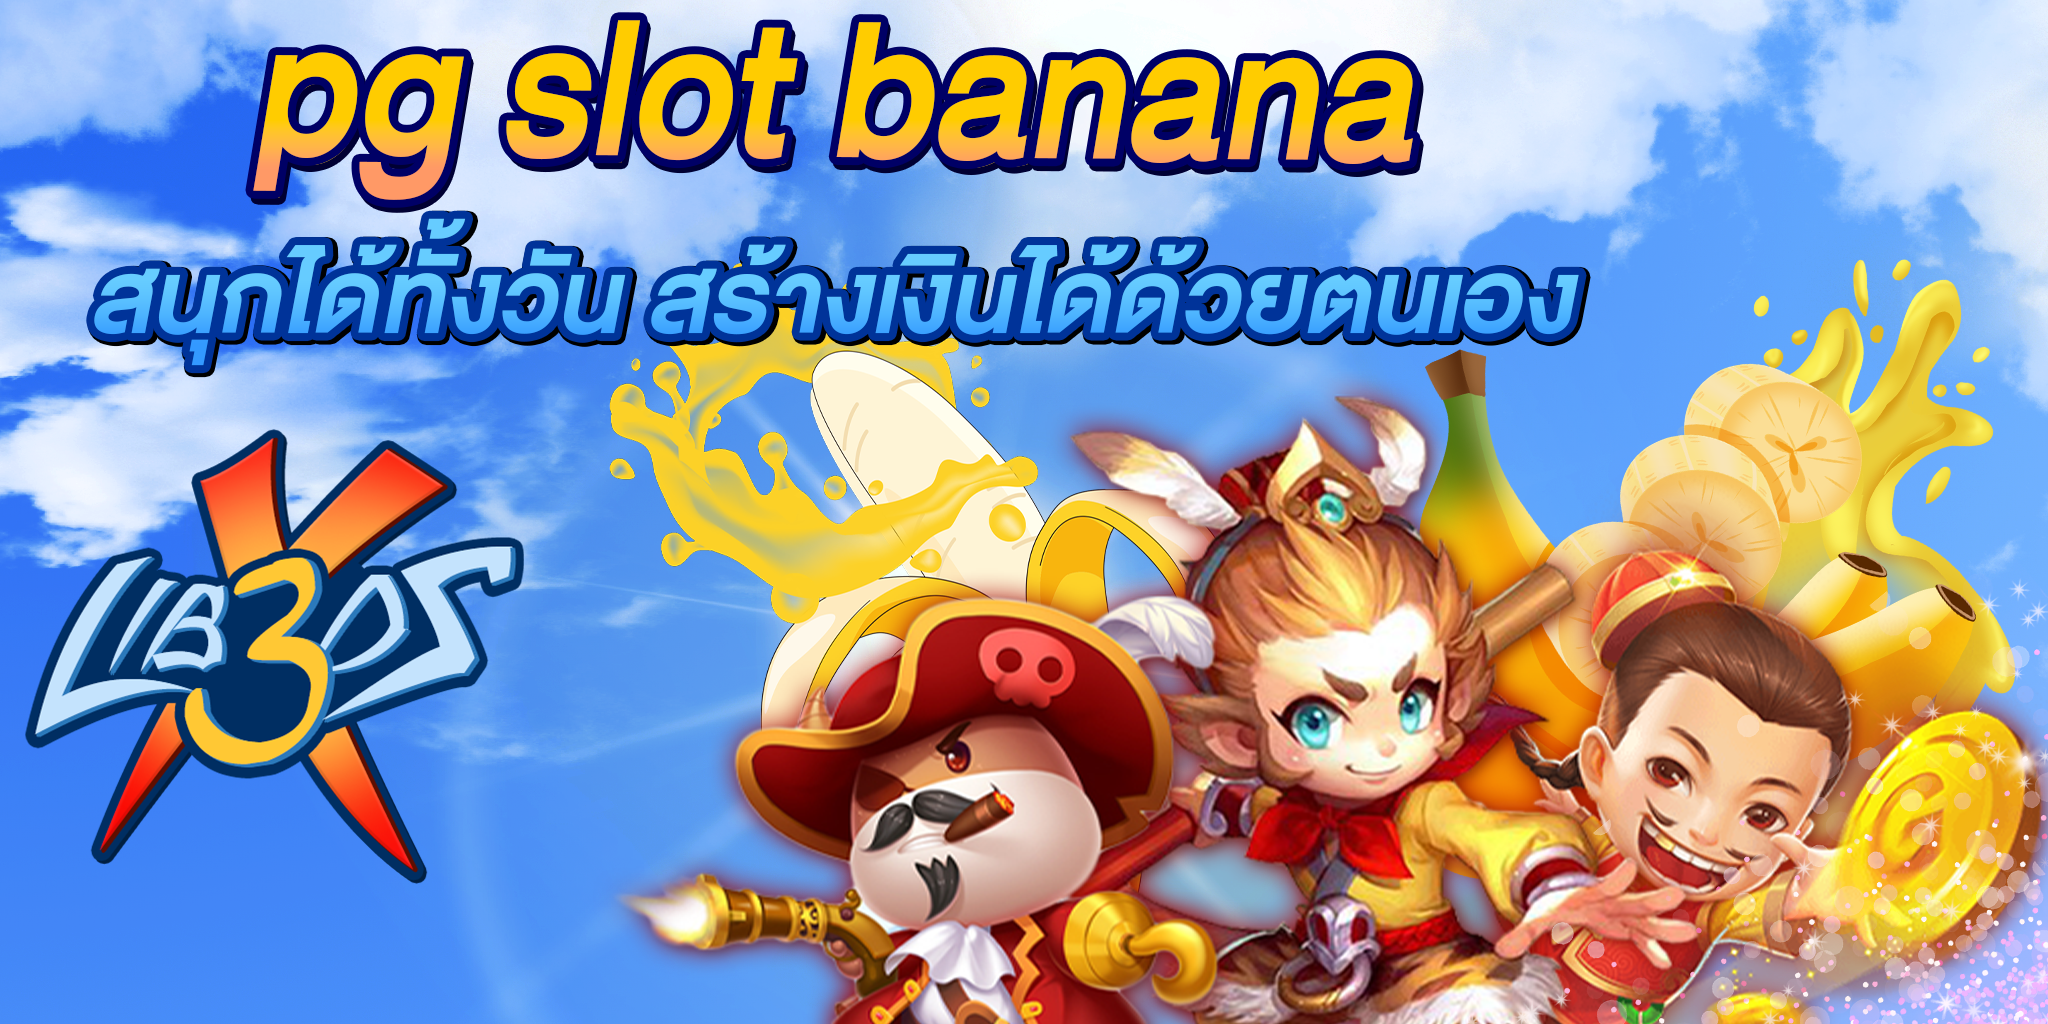 pg-slot-banana